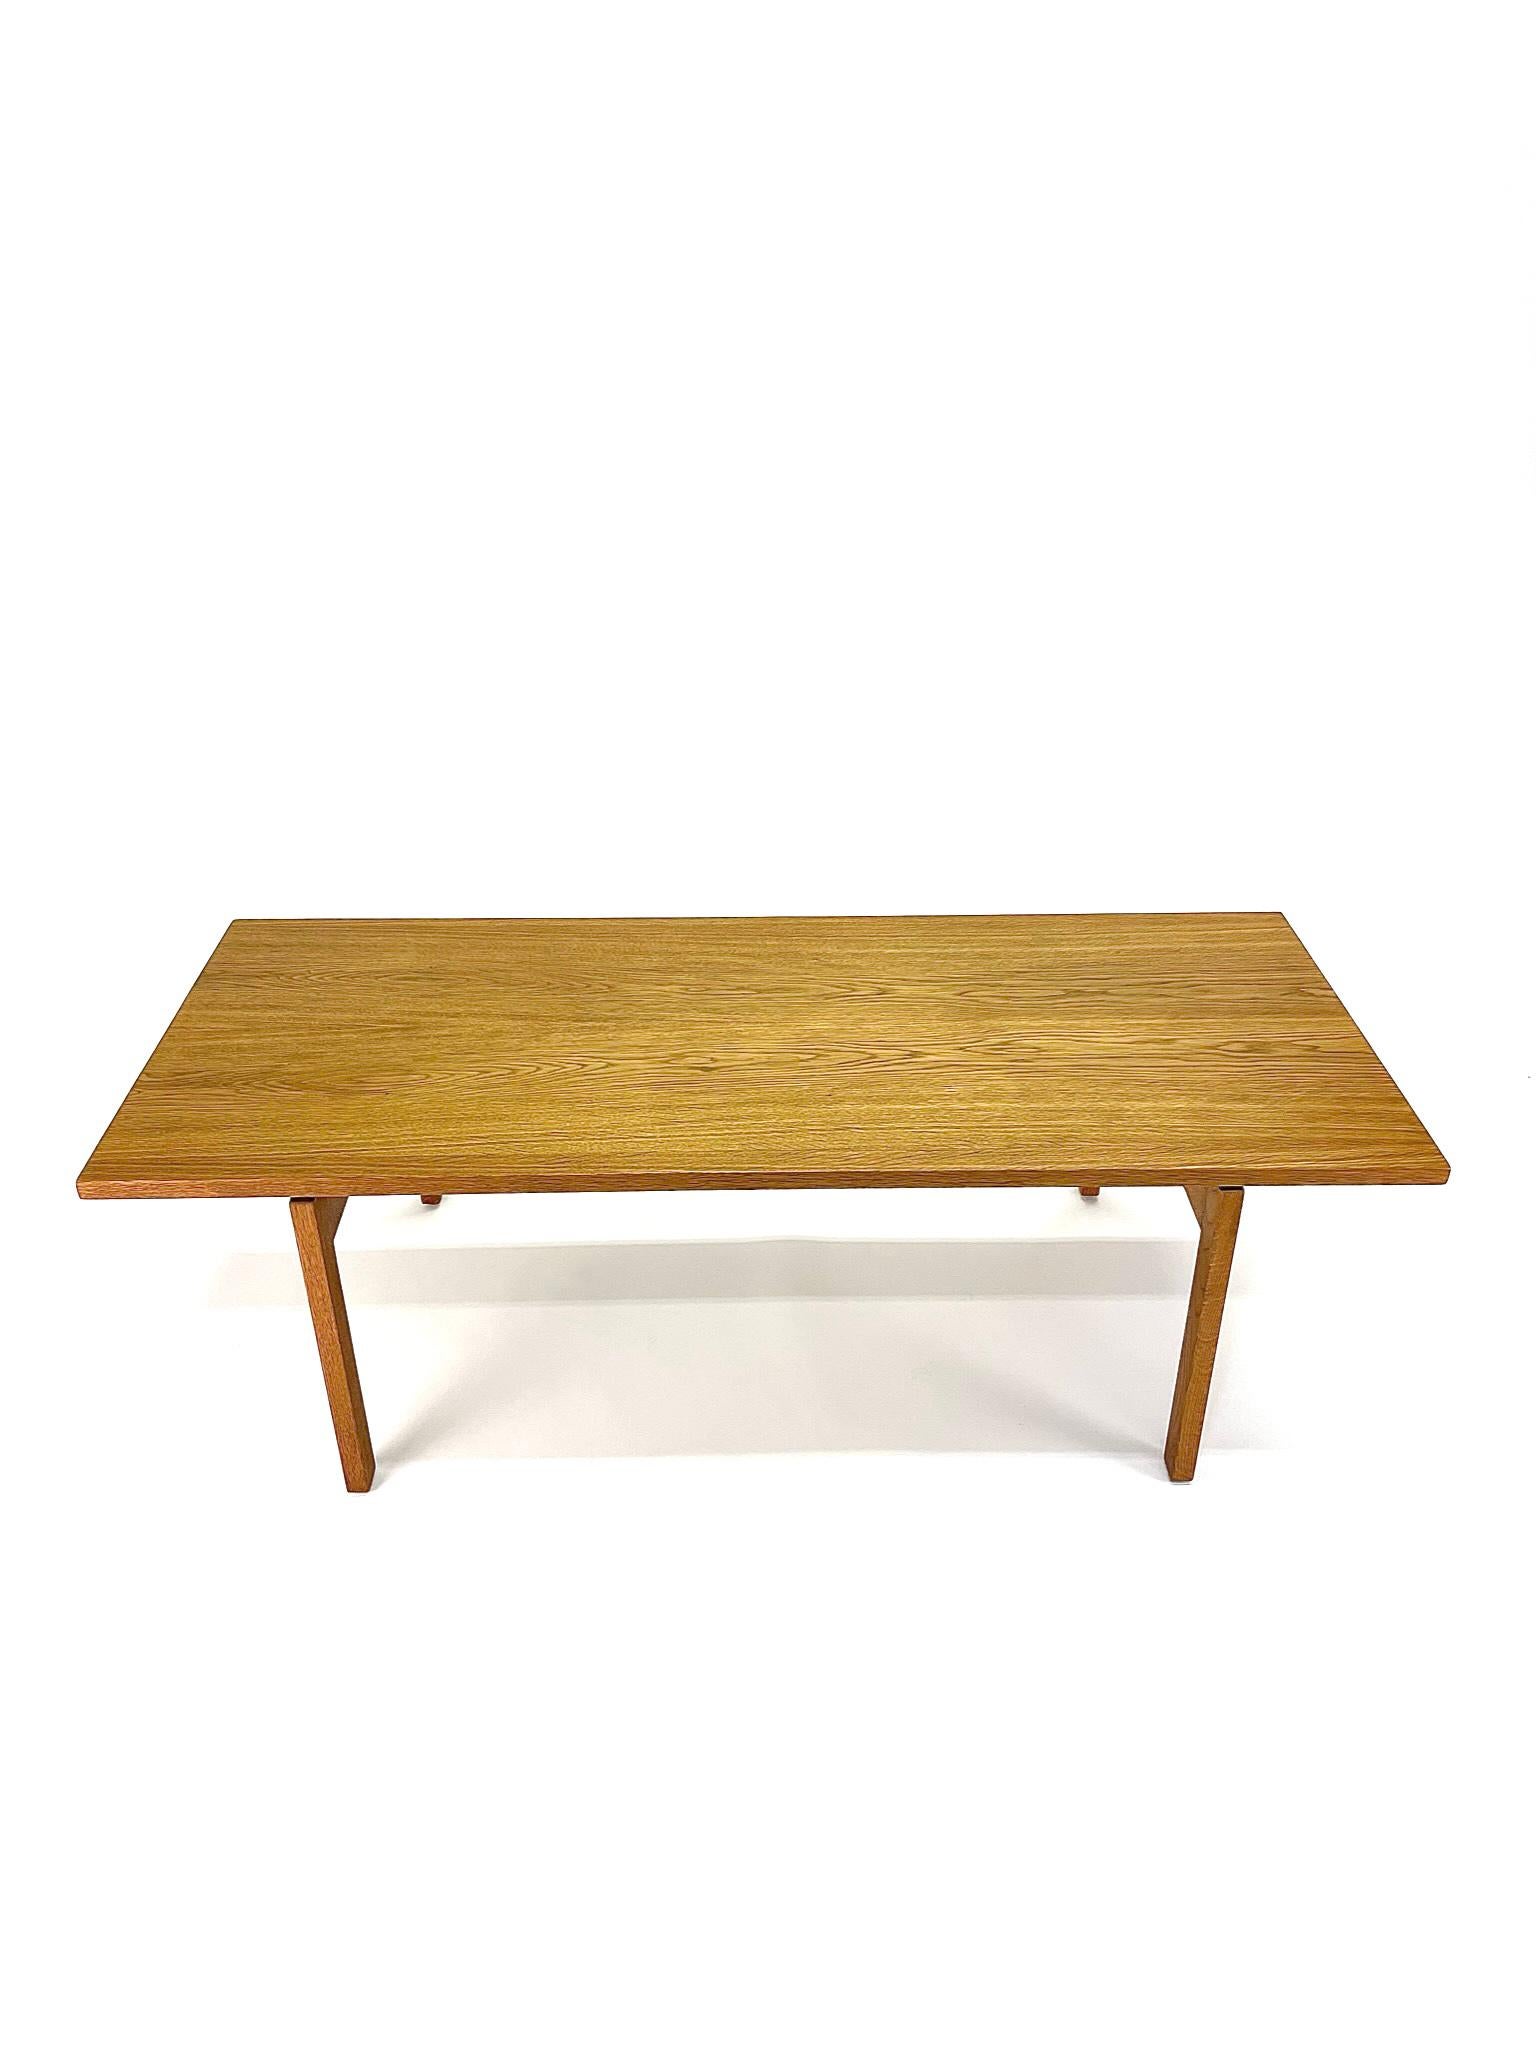 Mid-Century Modern Hans Wegner for Andreas Tuck Oak Coffee Table, Model AT-15 For Sale